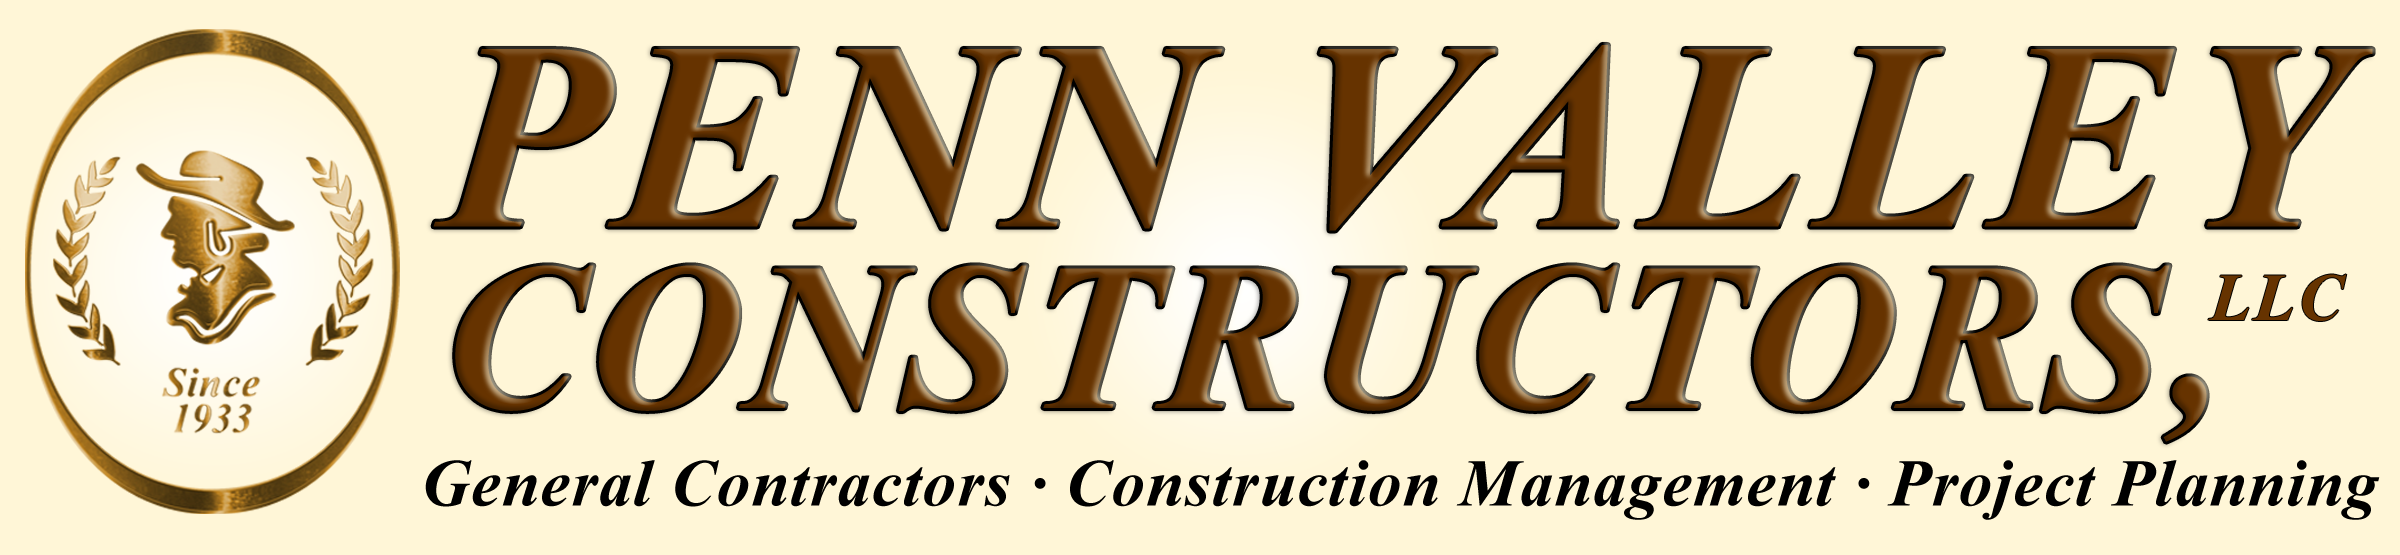 Penn Valley Constructors